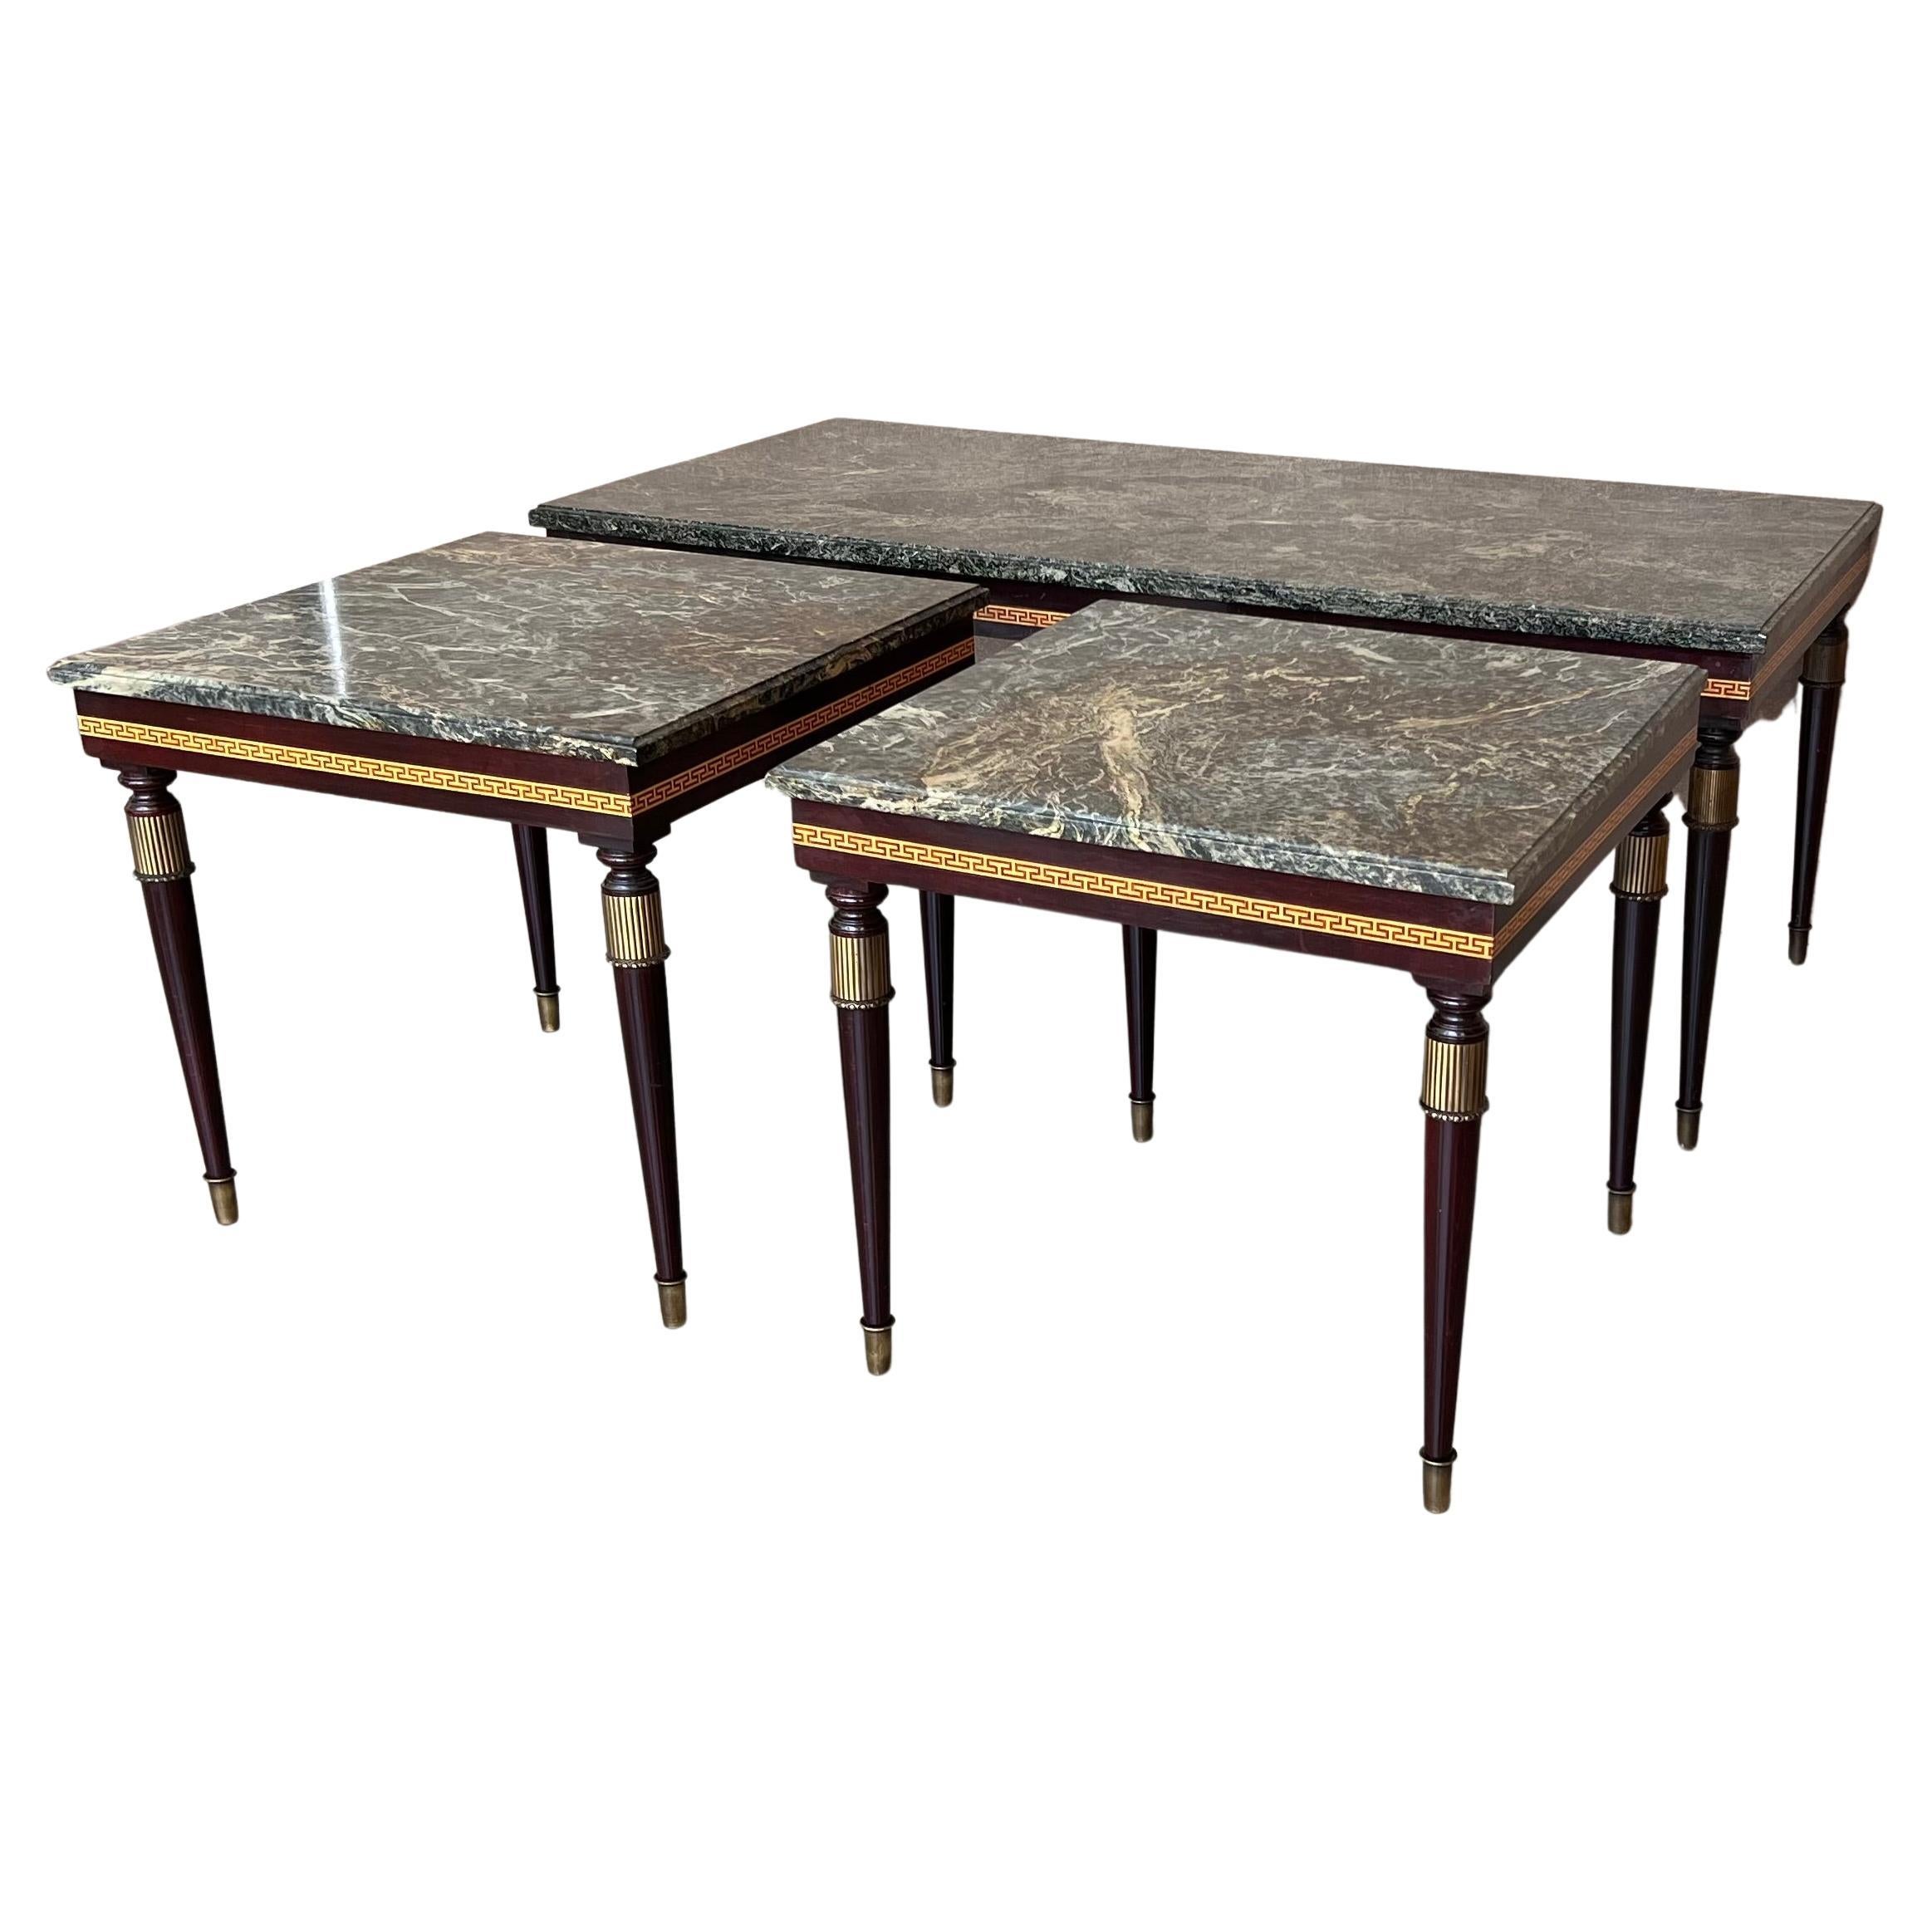 Set of Three Italian Modernist Midcentury Bronze-Mounted Coffee Tables